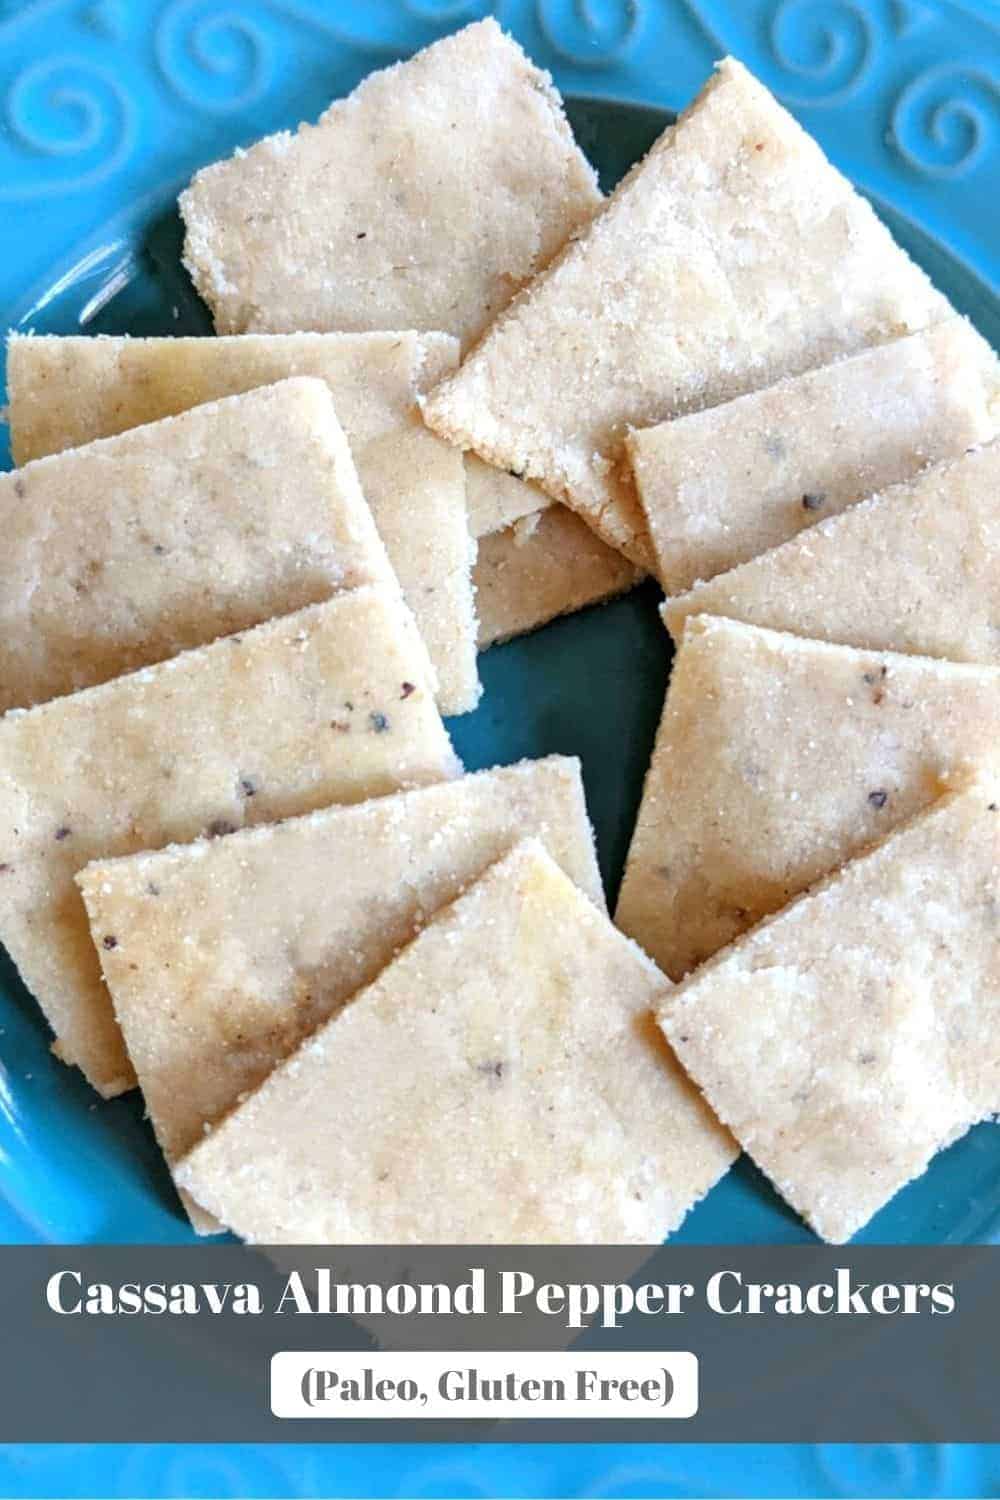 Guten-Free Almond and Cassava Flour Crackers (Paleo)